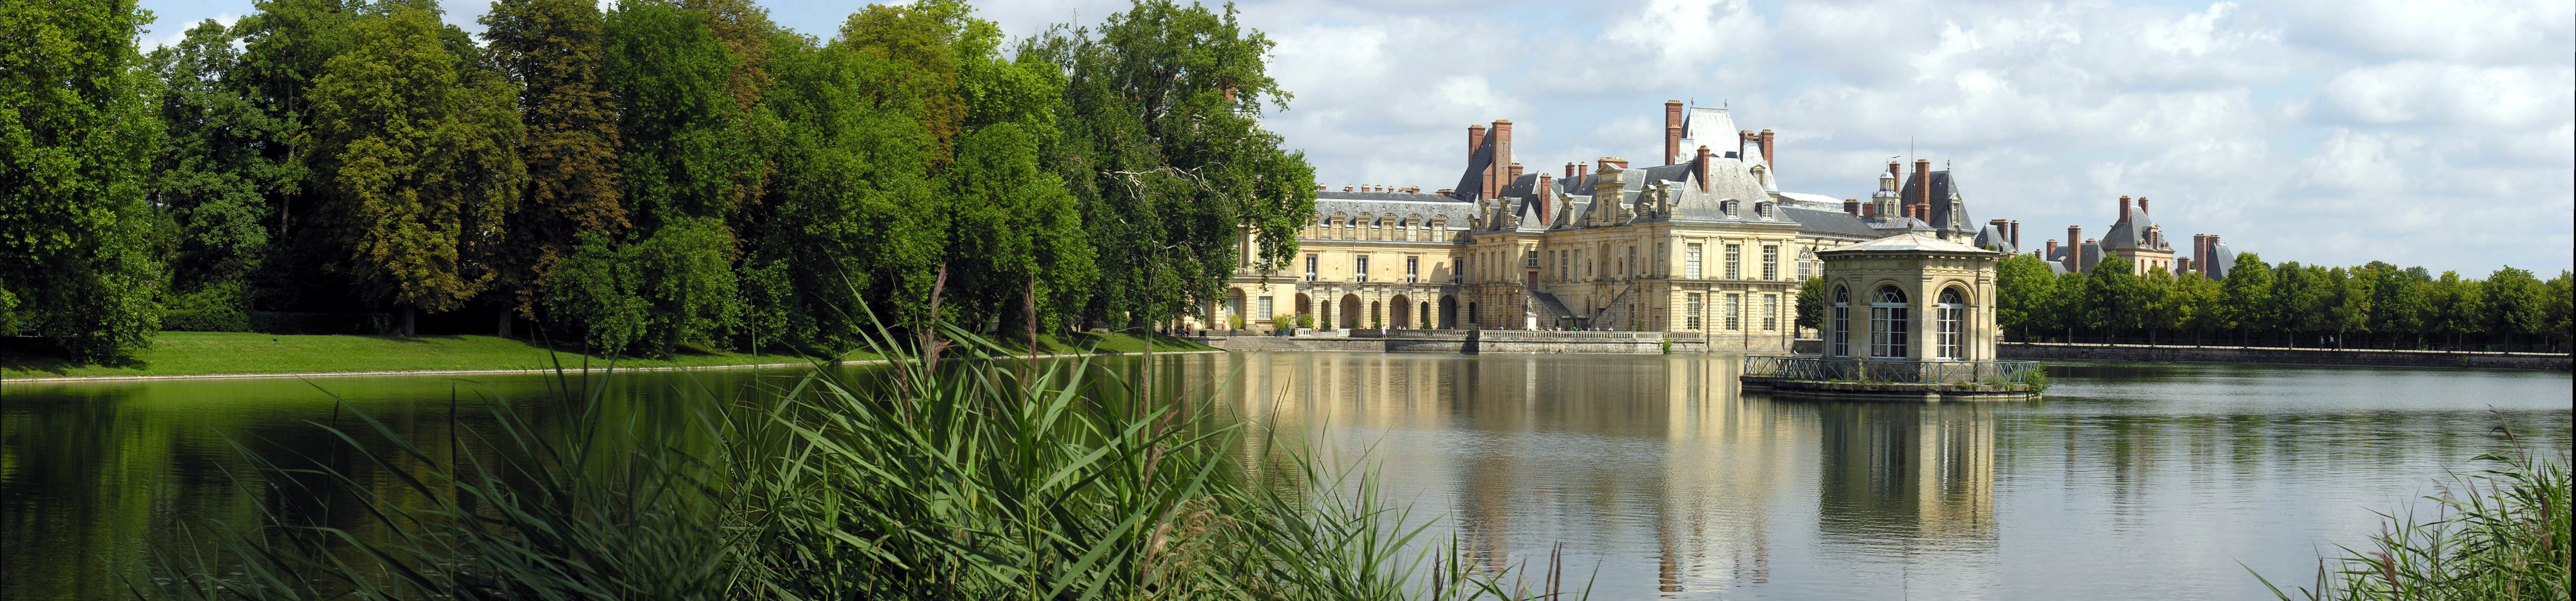 Castle of Fontainebleau - France (5).jpg